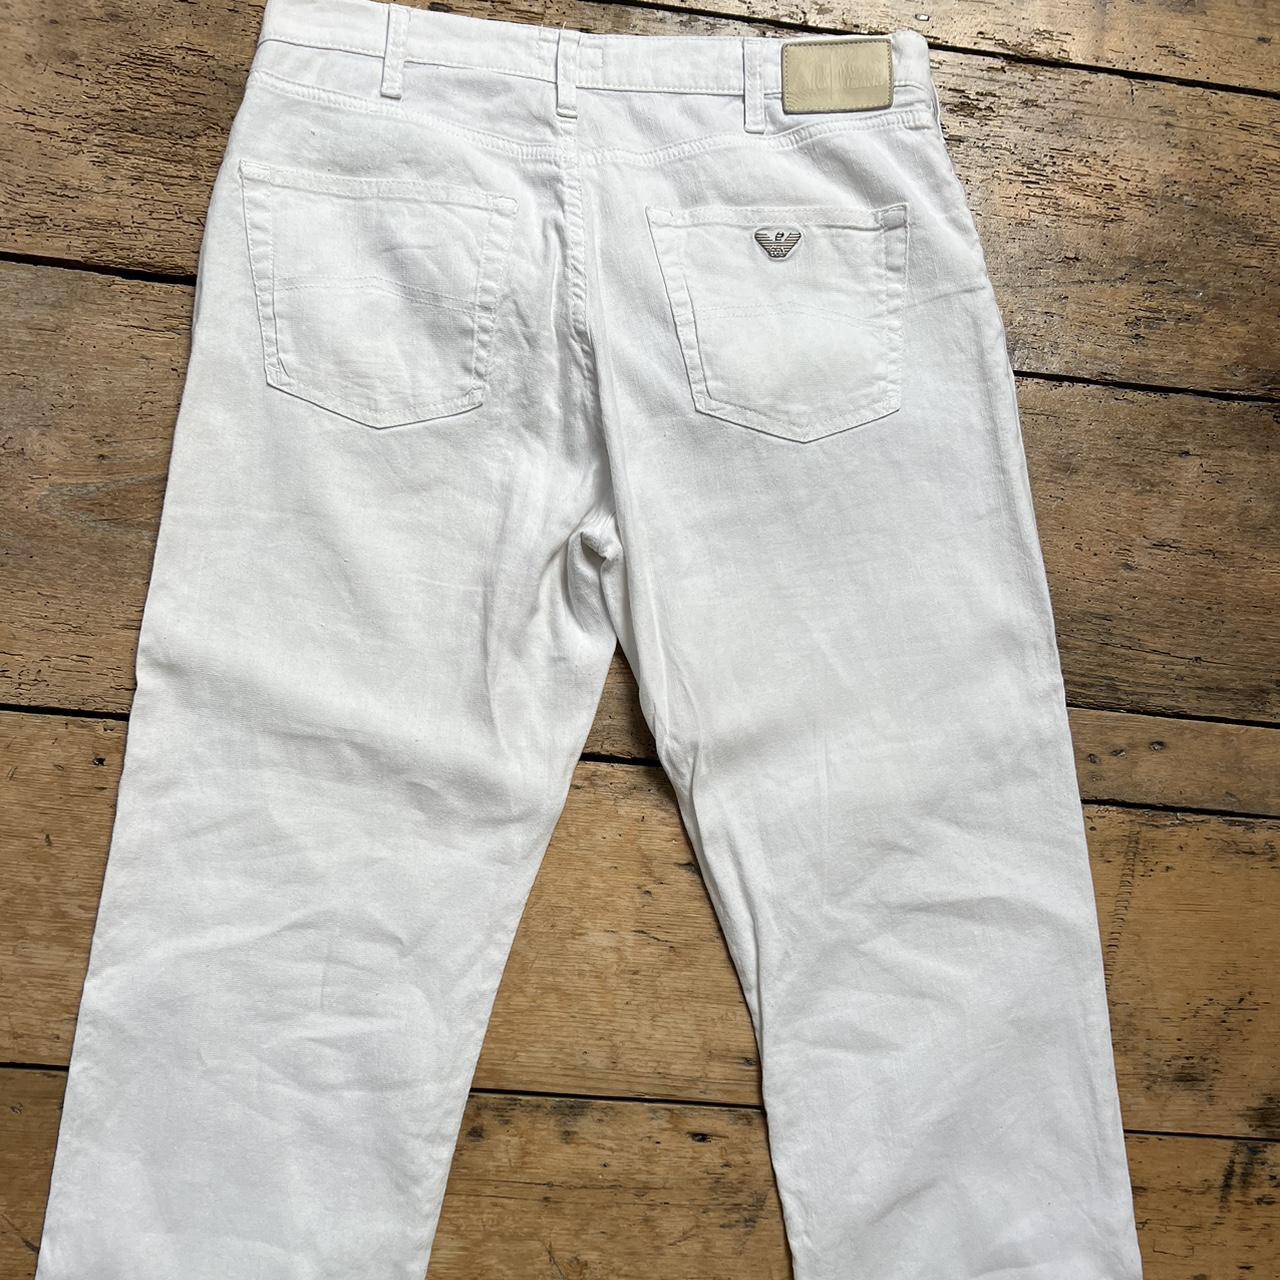 Armani jeans Comfort fit Linen perfect for... - Depop